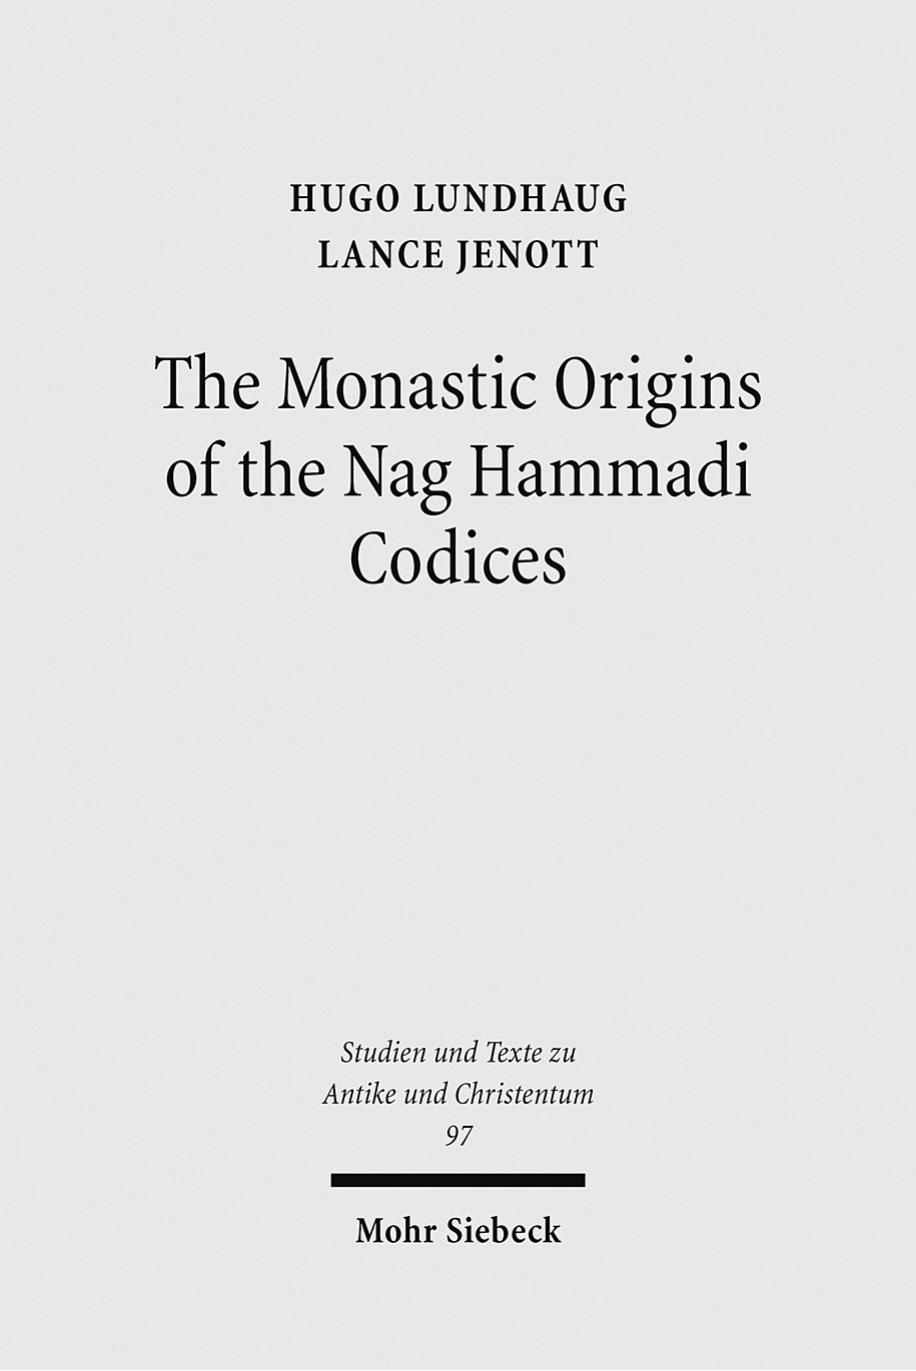 The Monastic Origins of the Nag Hammadi Codices by Hugo Lundhaug Lance Jenott